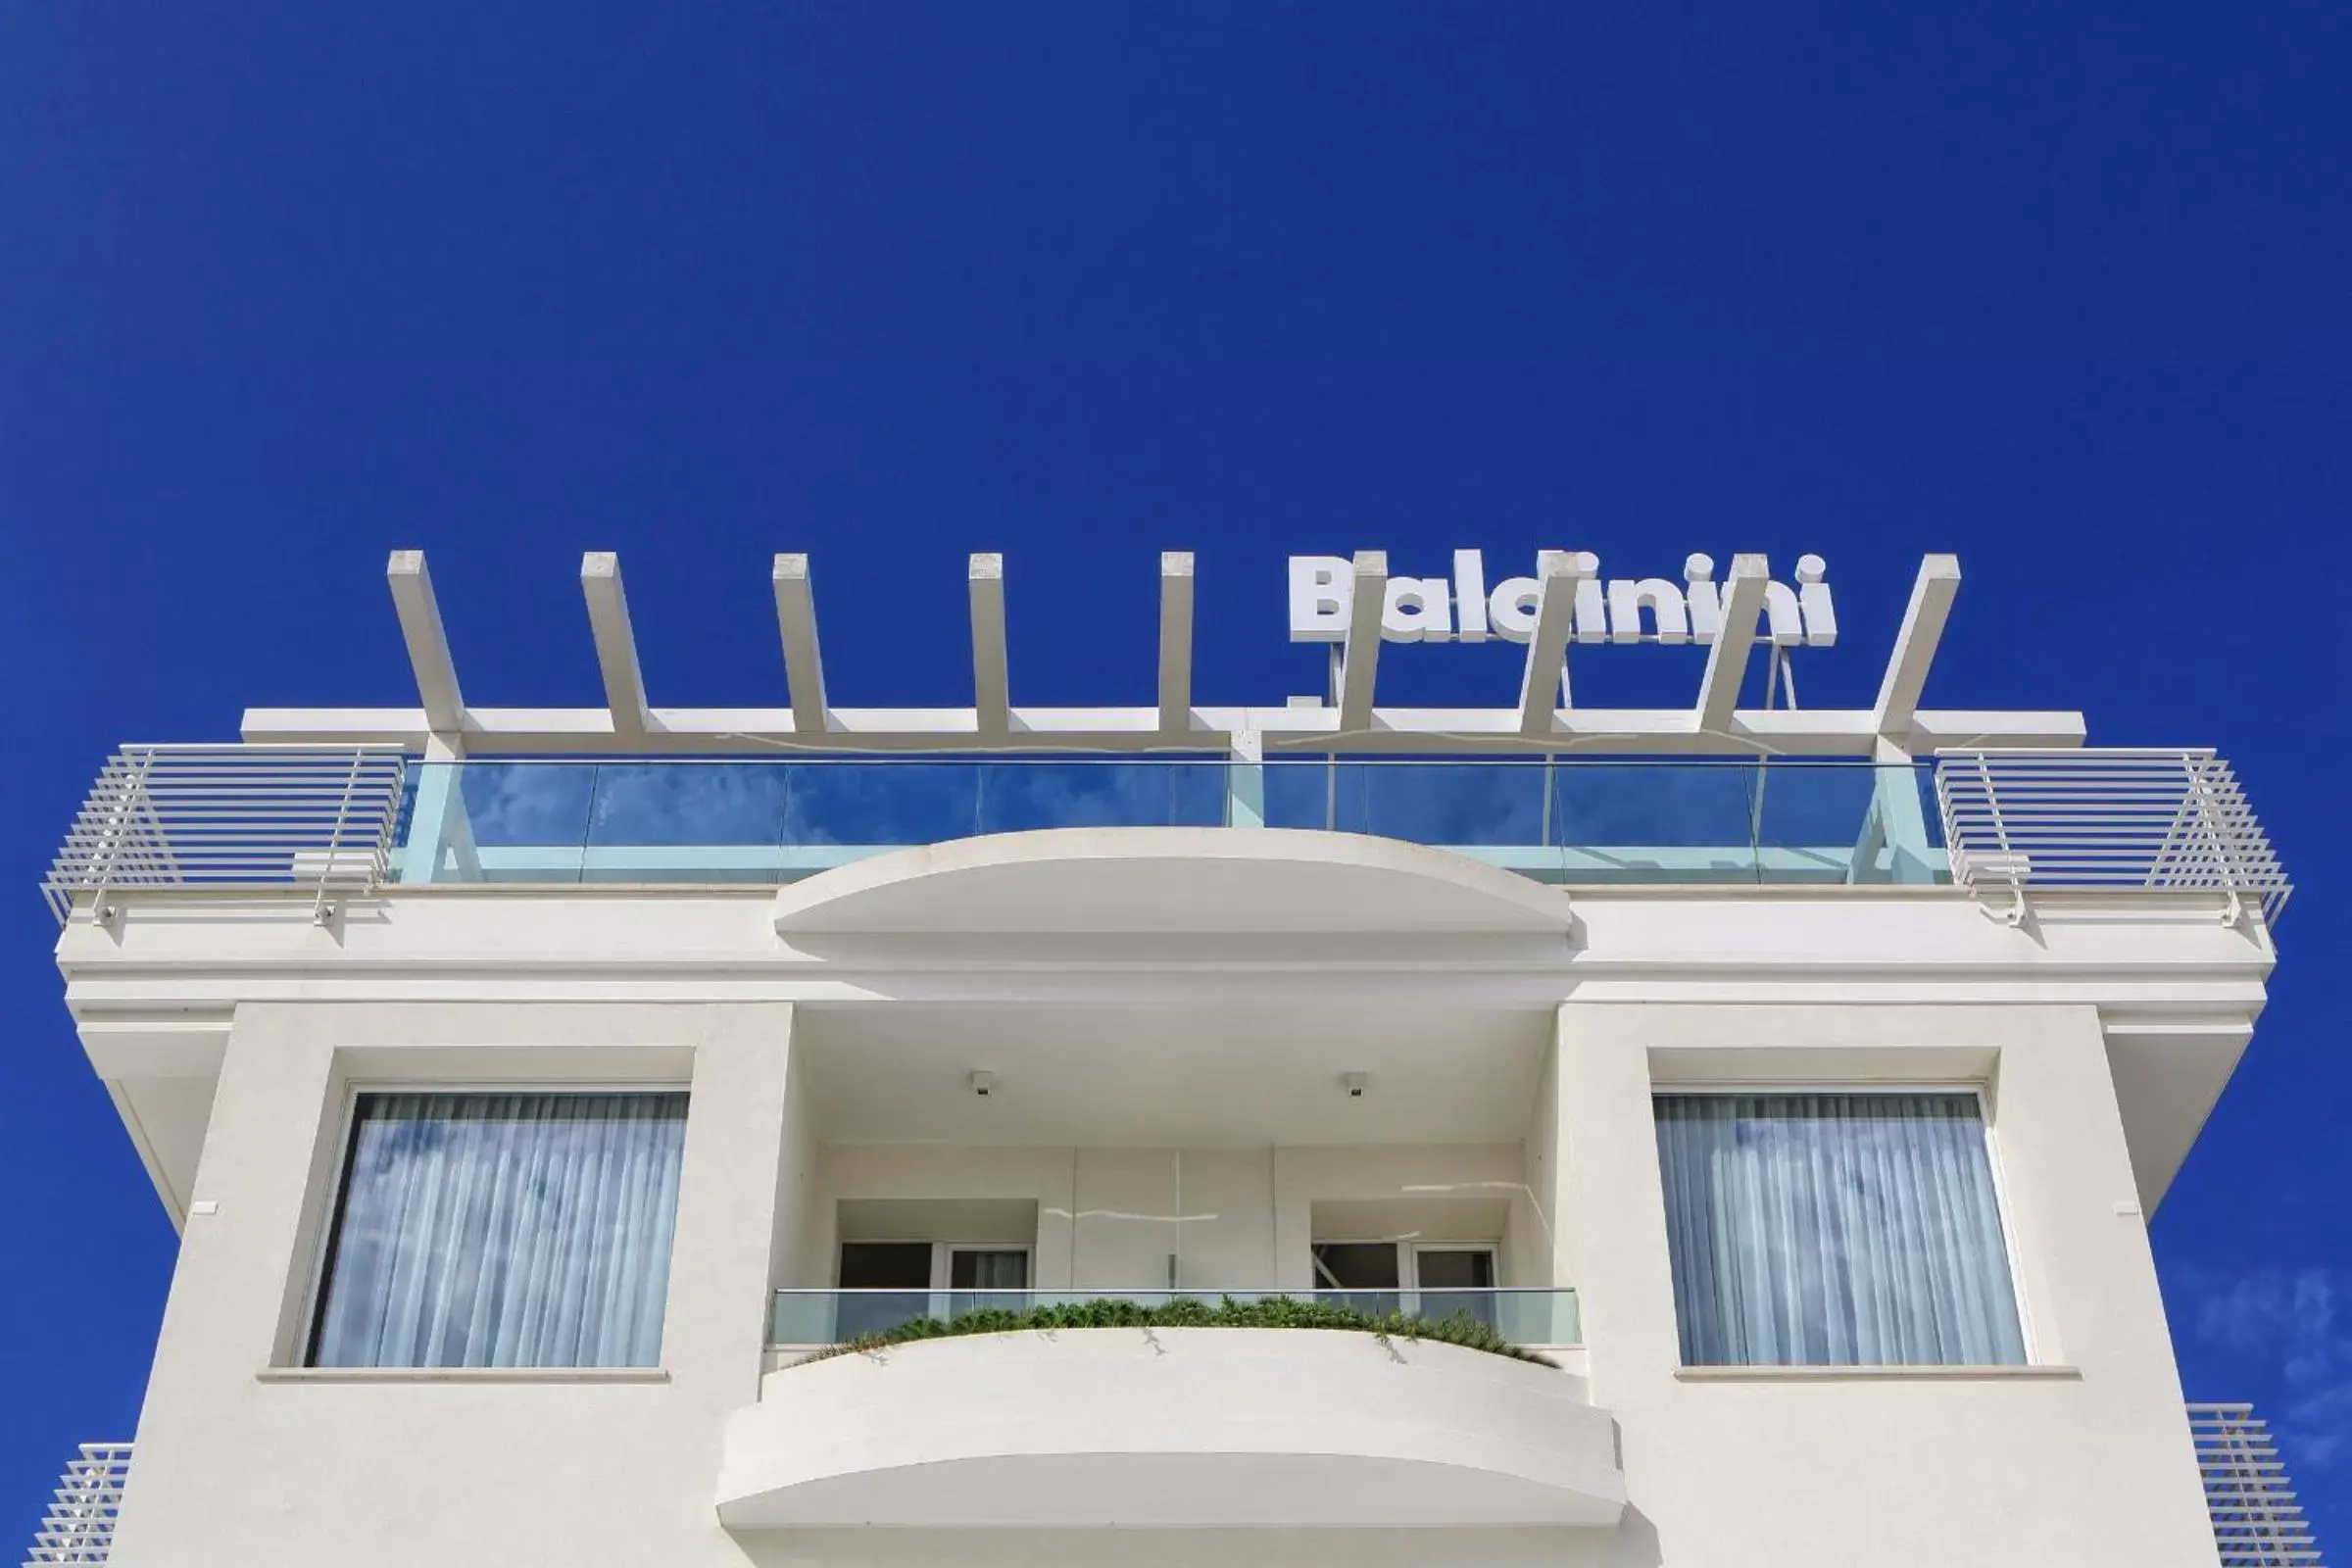 Property building, Facade/Entrance in Baldinini Hotel